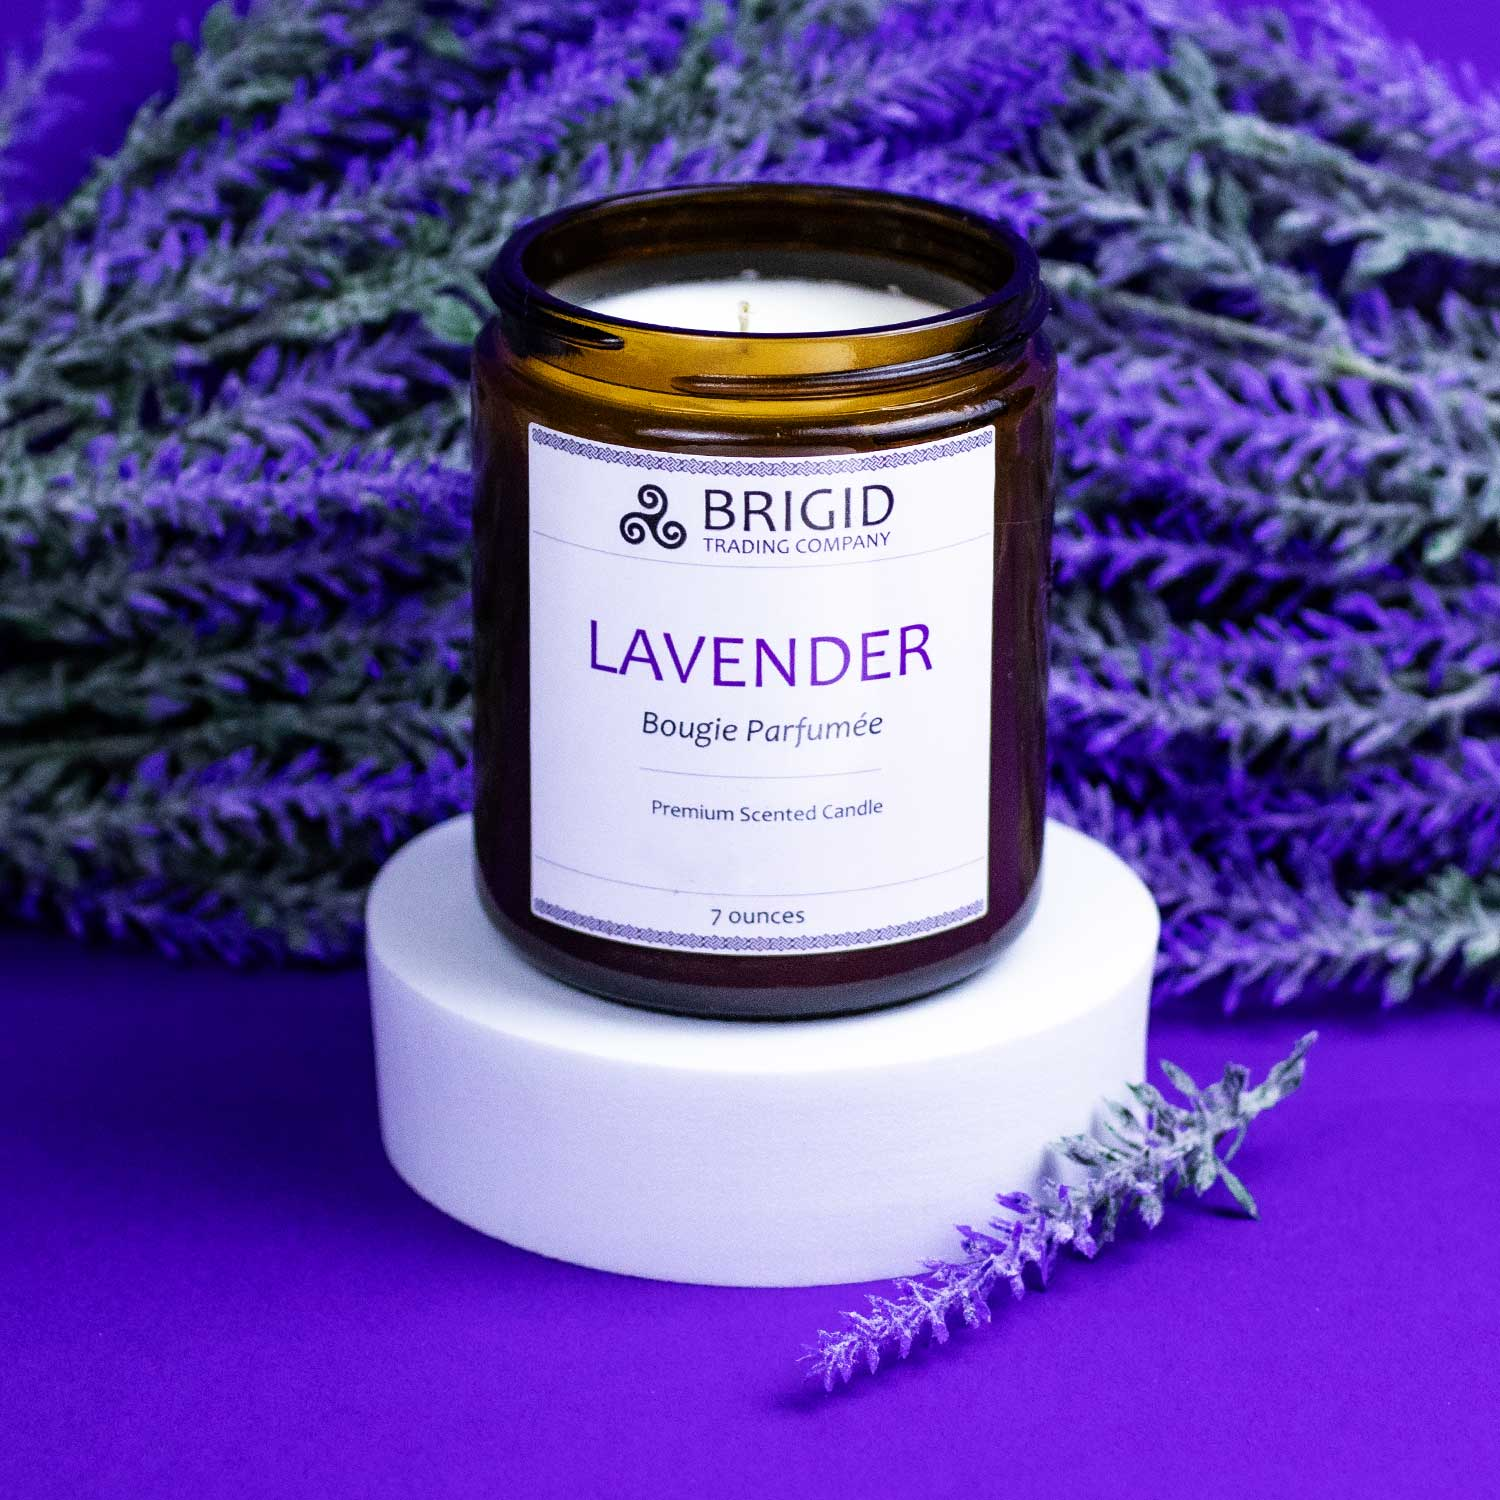 lavender campfire spiced cider brigid trading company kitsap county washington state ireland irish celtic inspired